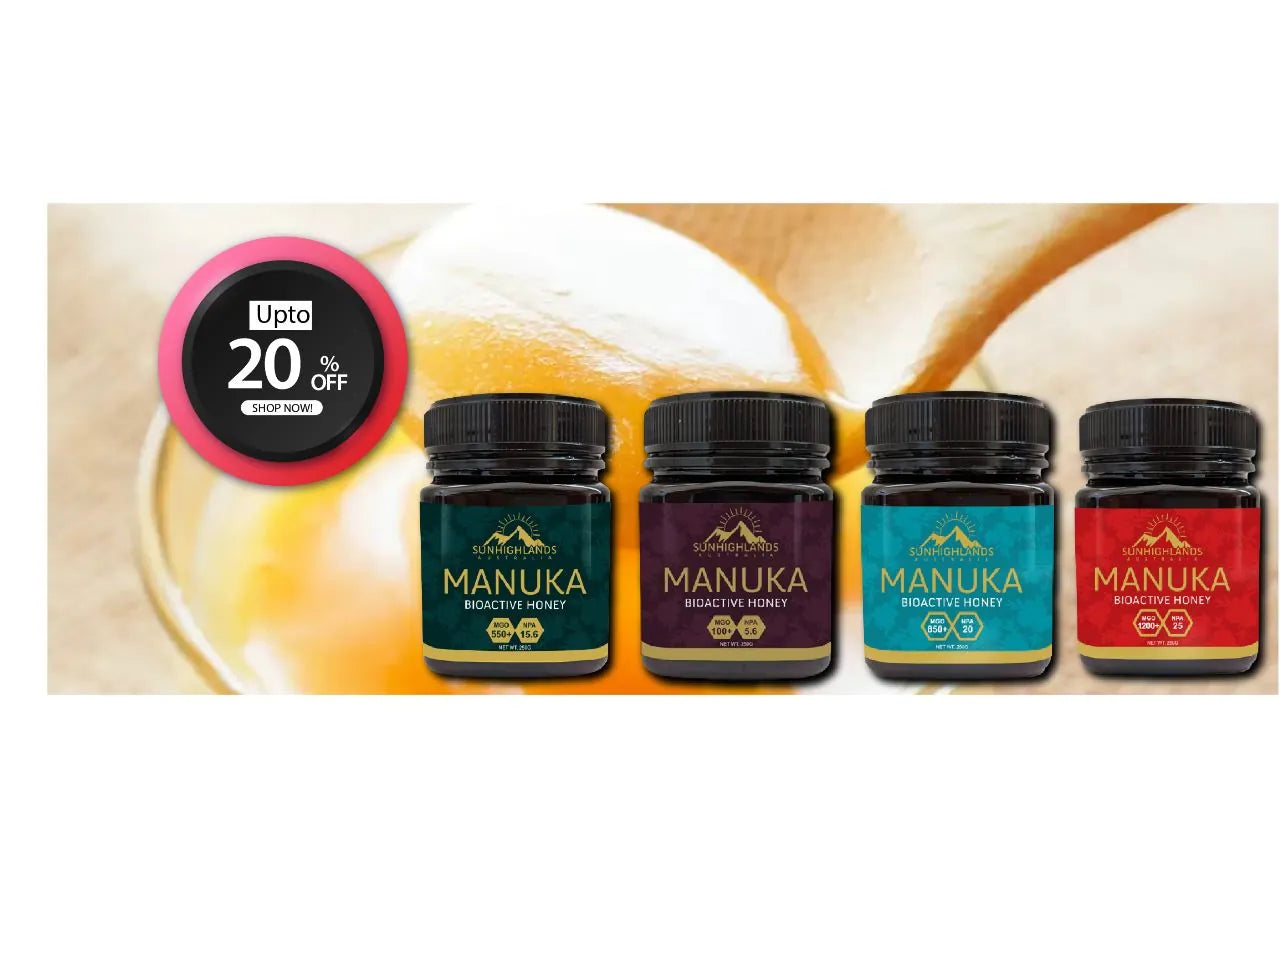 Collection of Manuka Honey